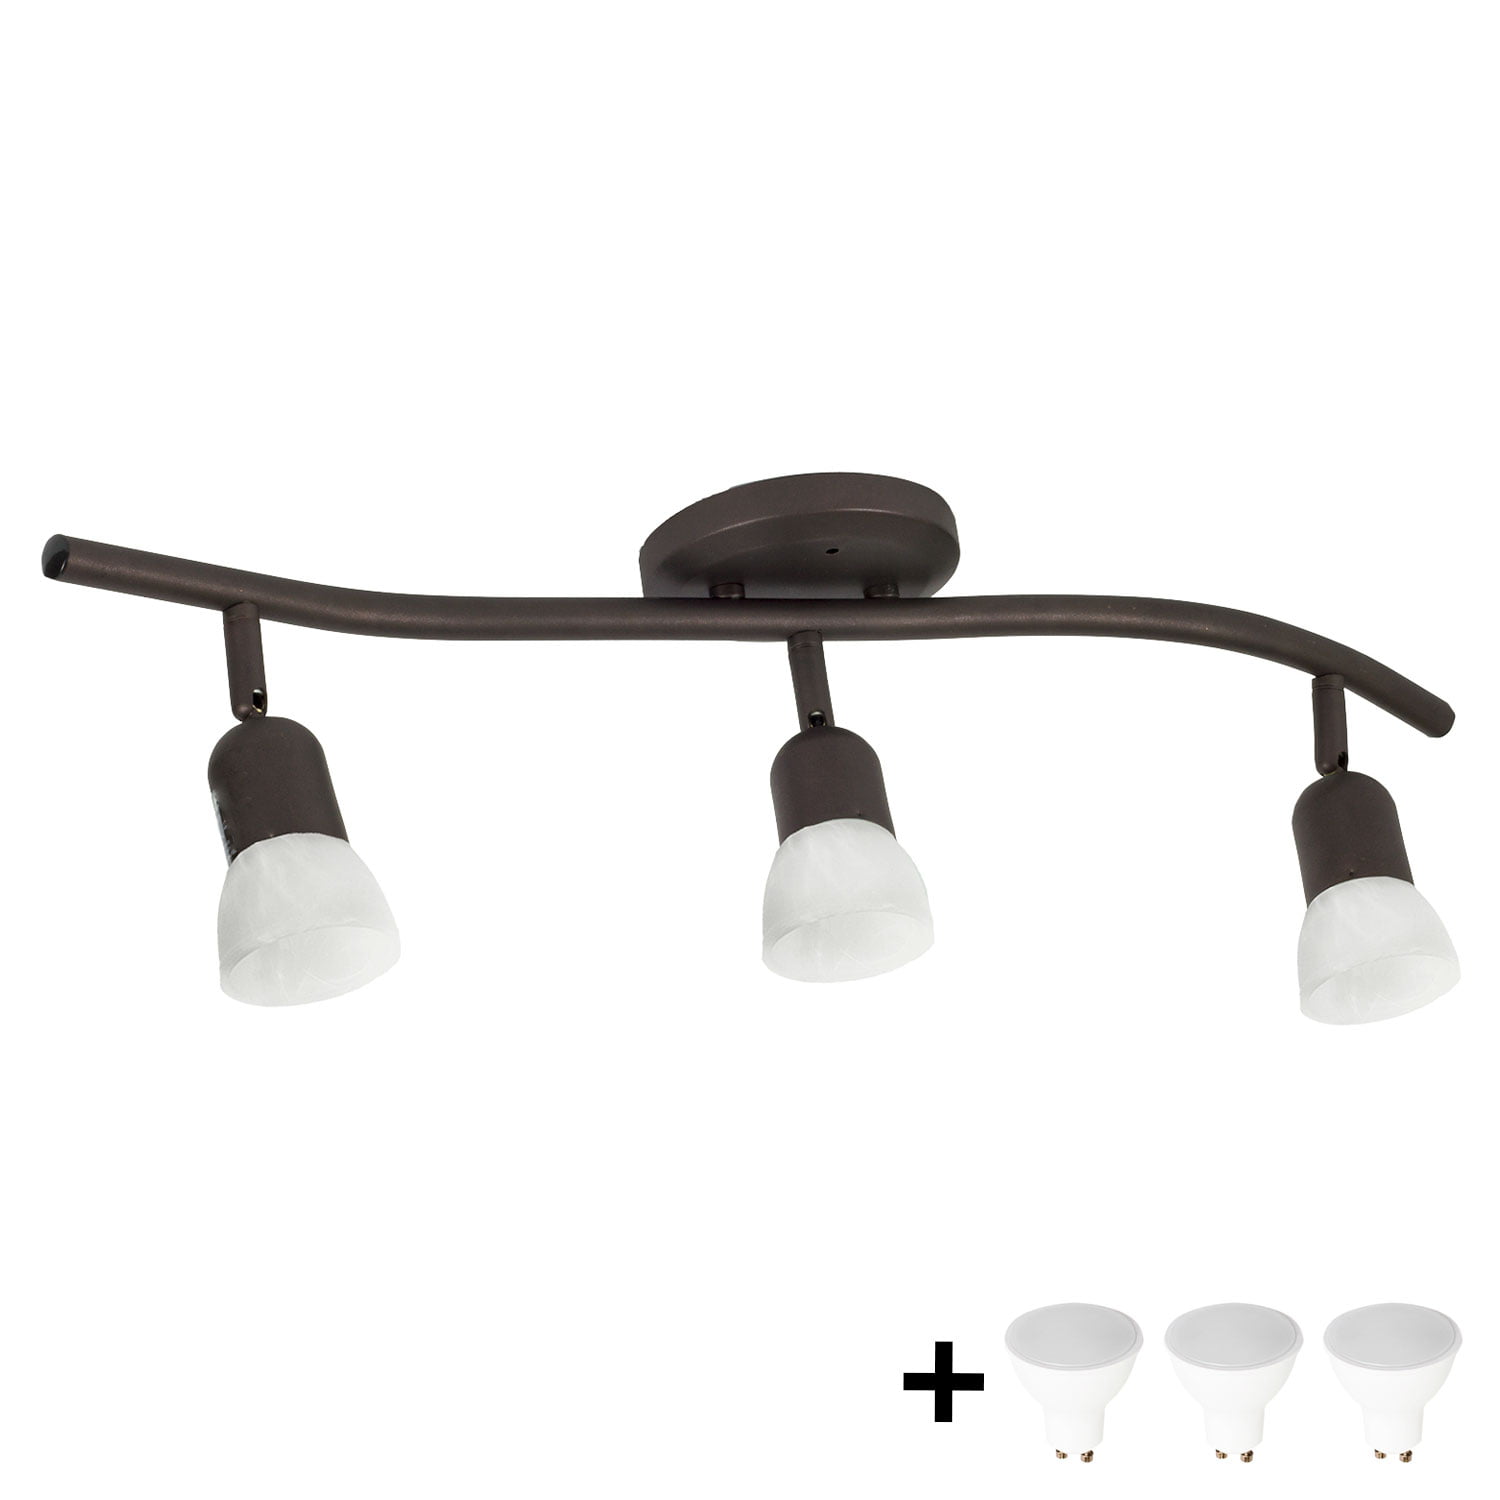 9W LED Track Light Led Rail Lamp 3 Heads Adjustable Spotlight Ceiling Lighting 